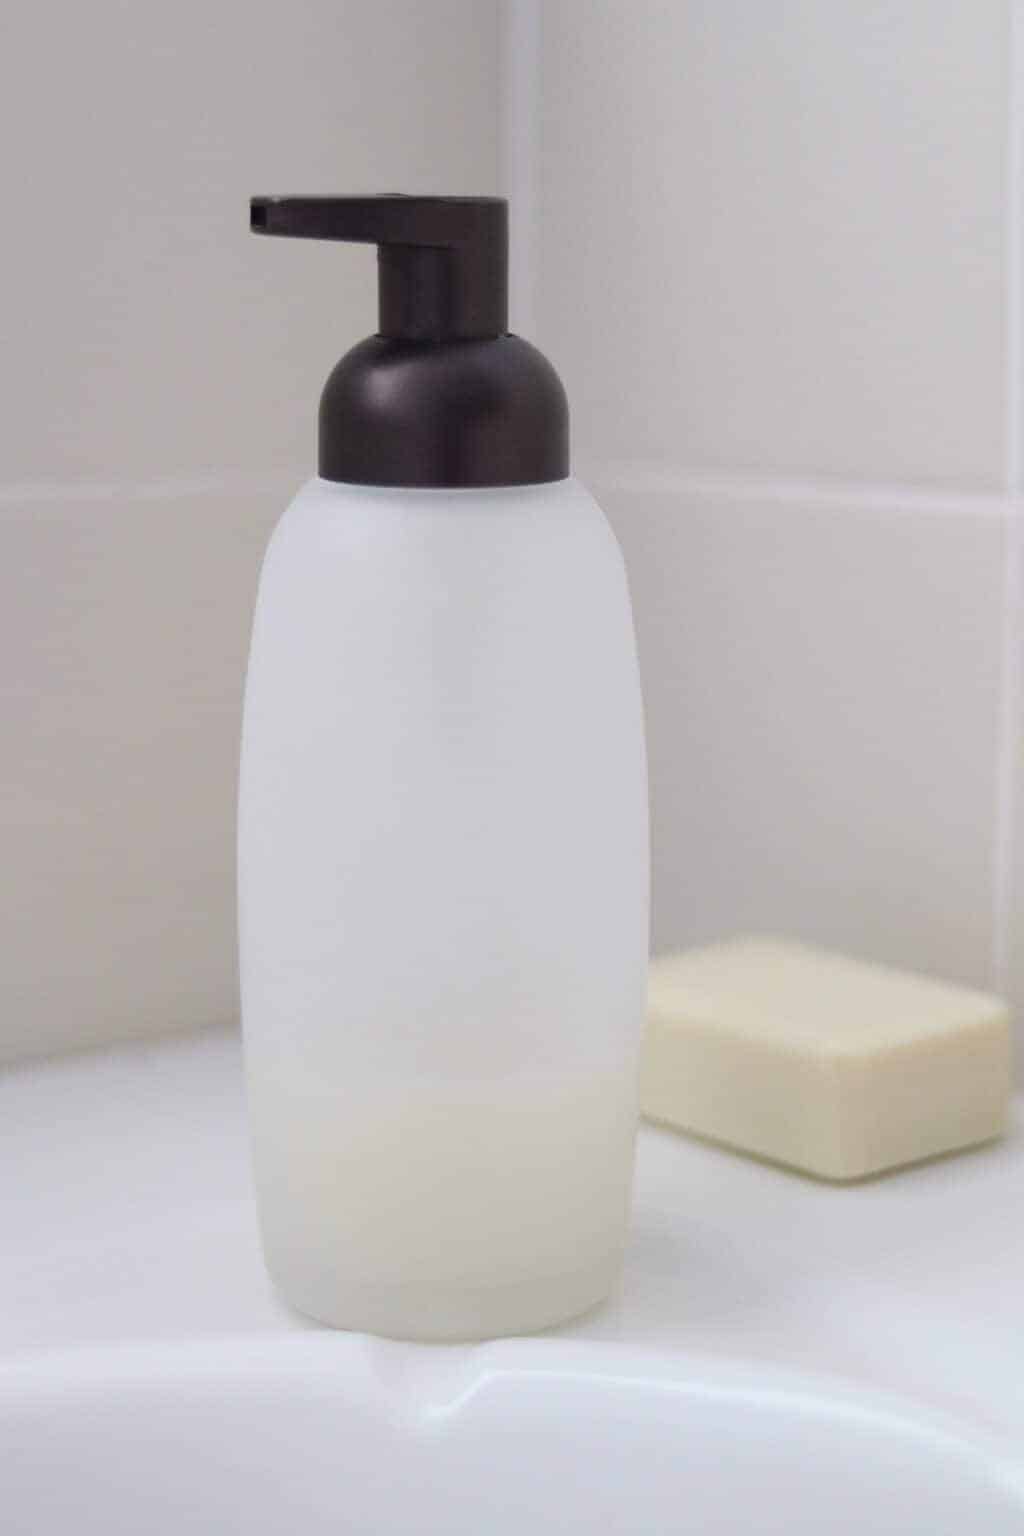 Glass shampoo container with soap bar on bathtub edge.